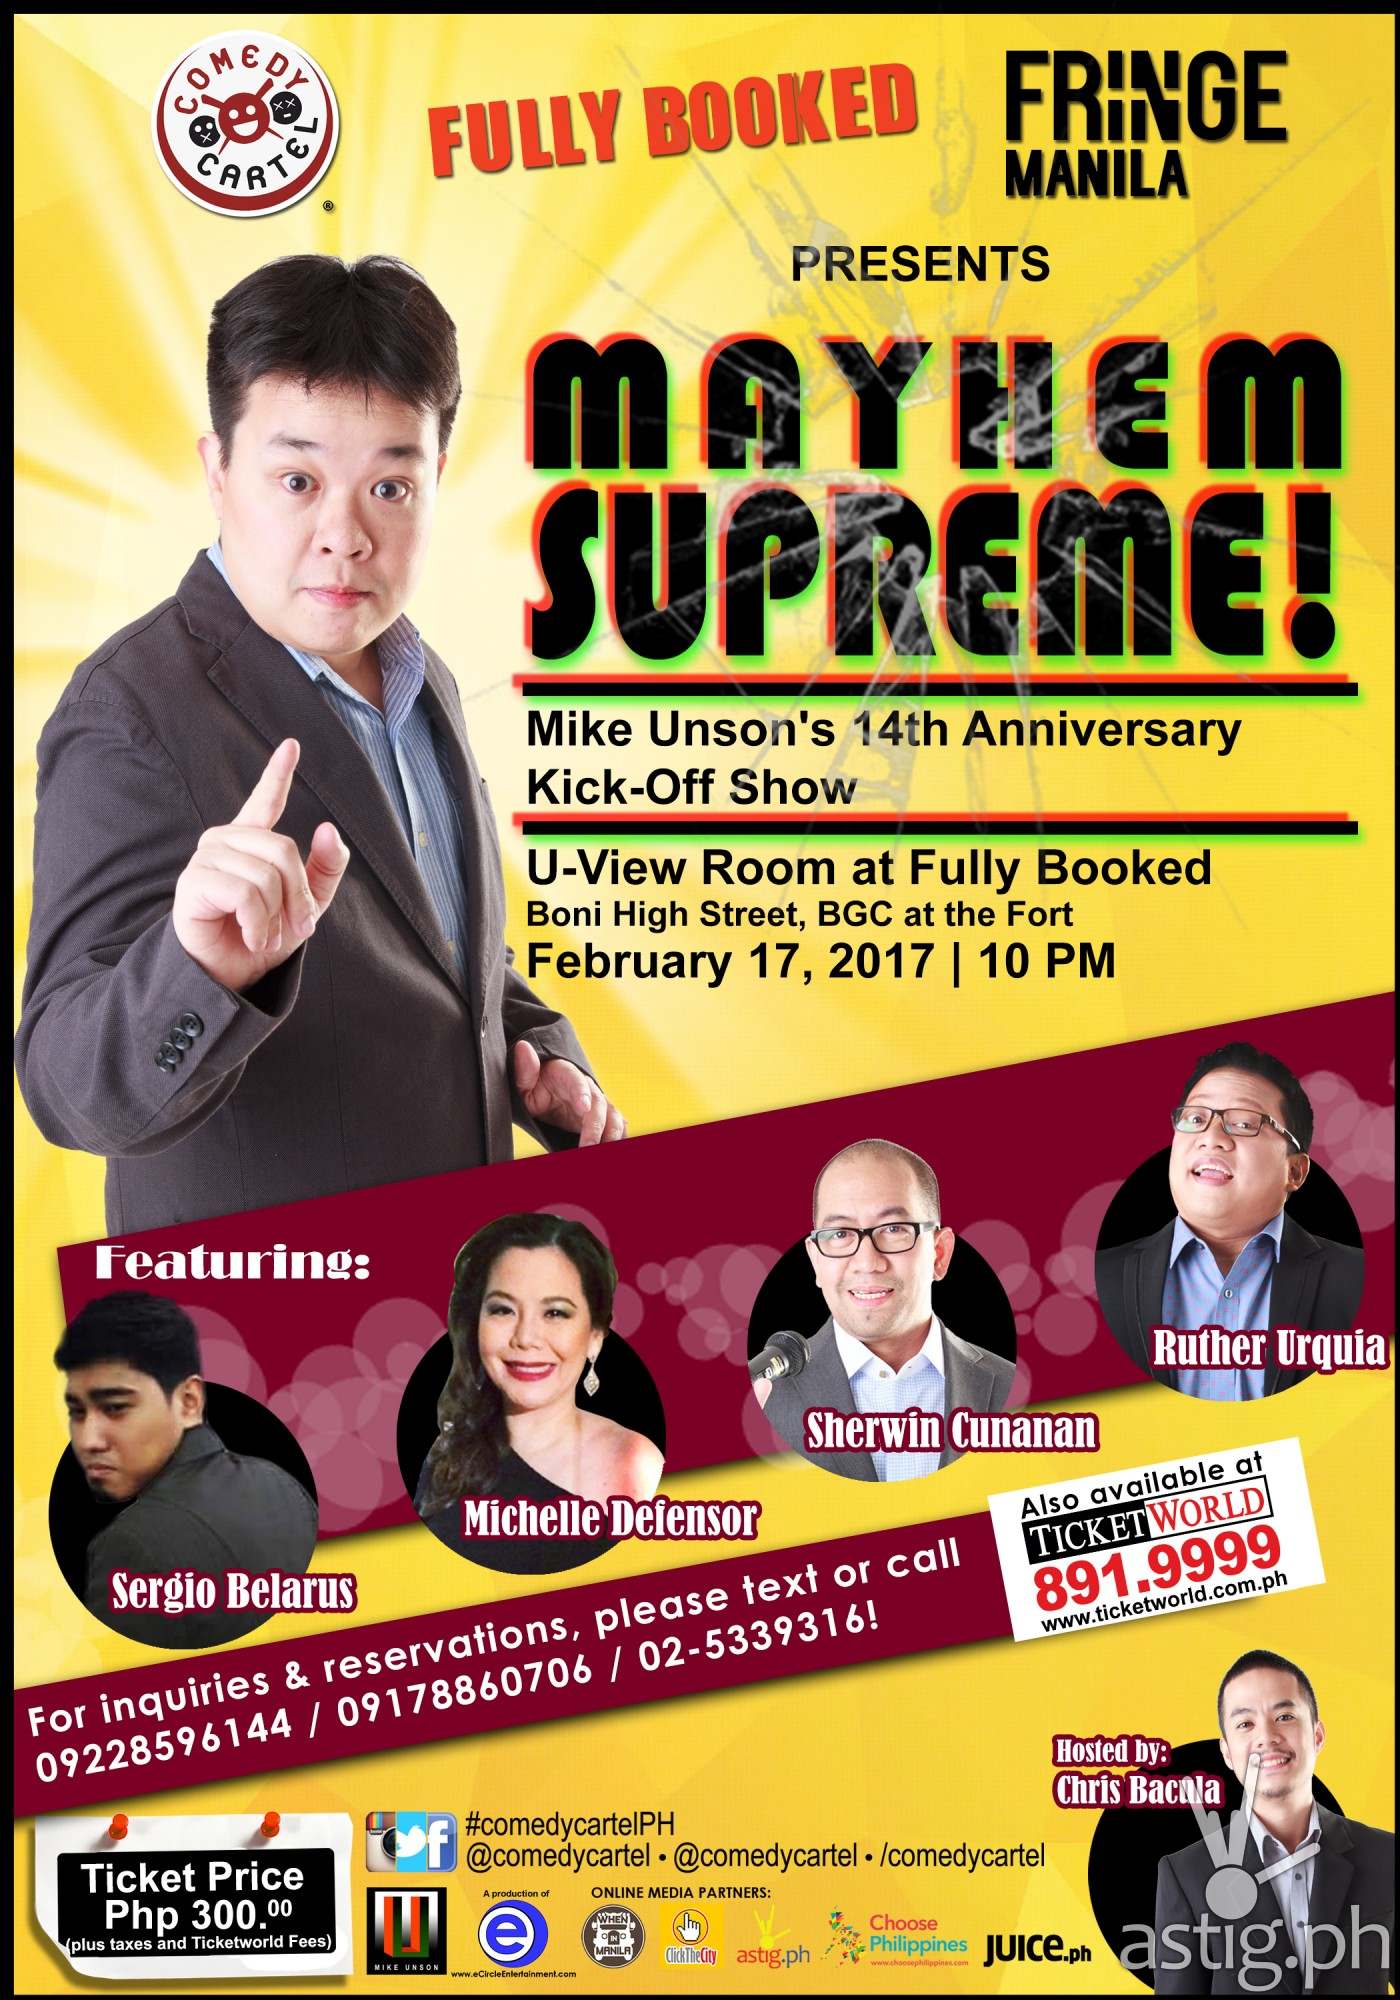 Mayhem Supreme!: Mike Unson's Anniversary Kick-Off Show